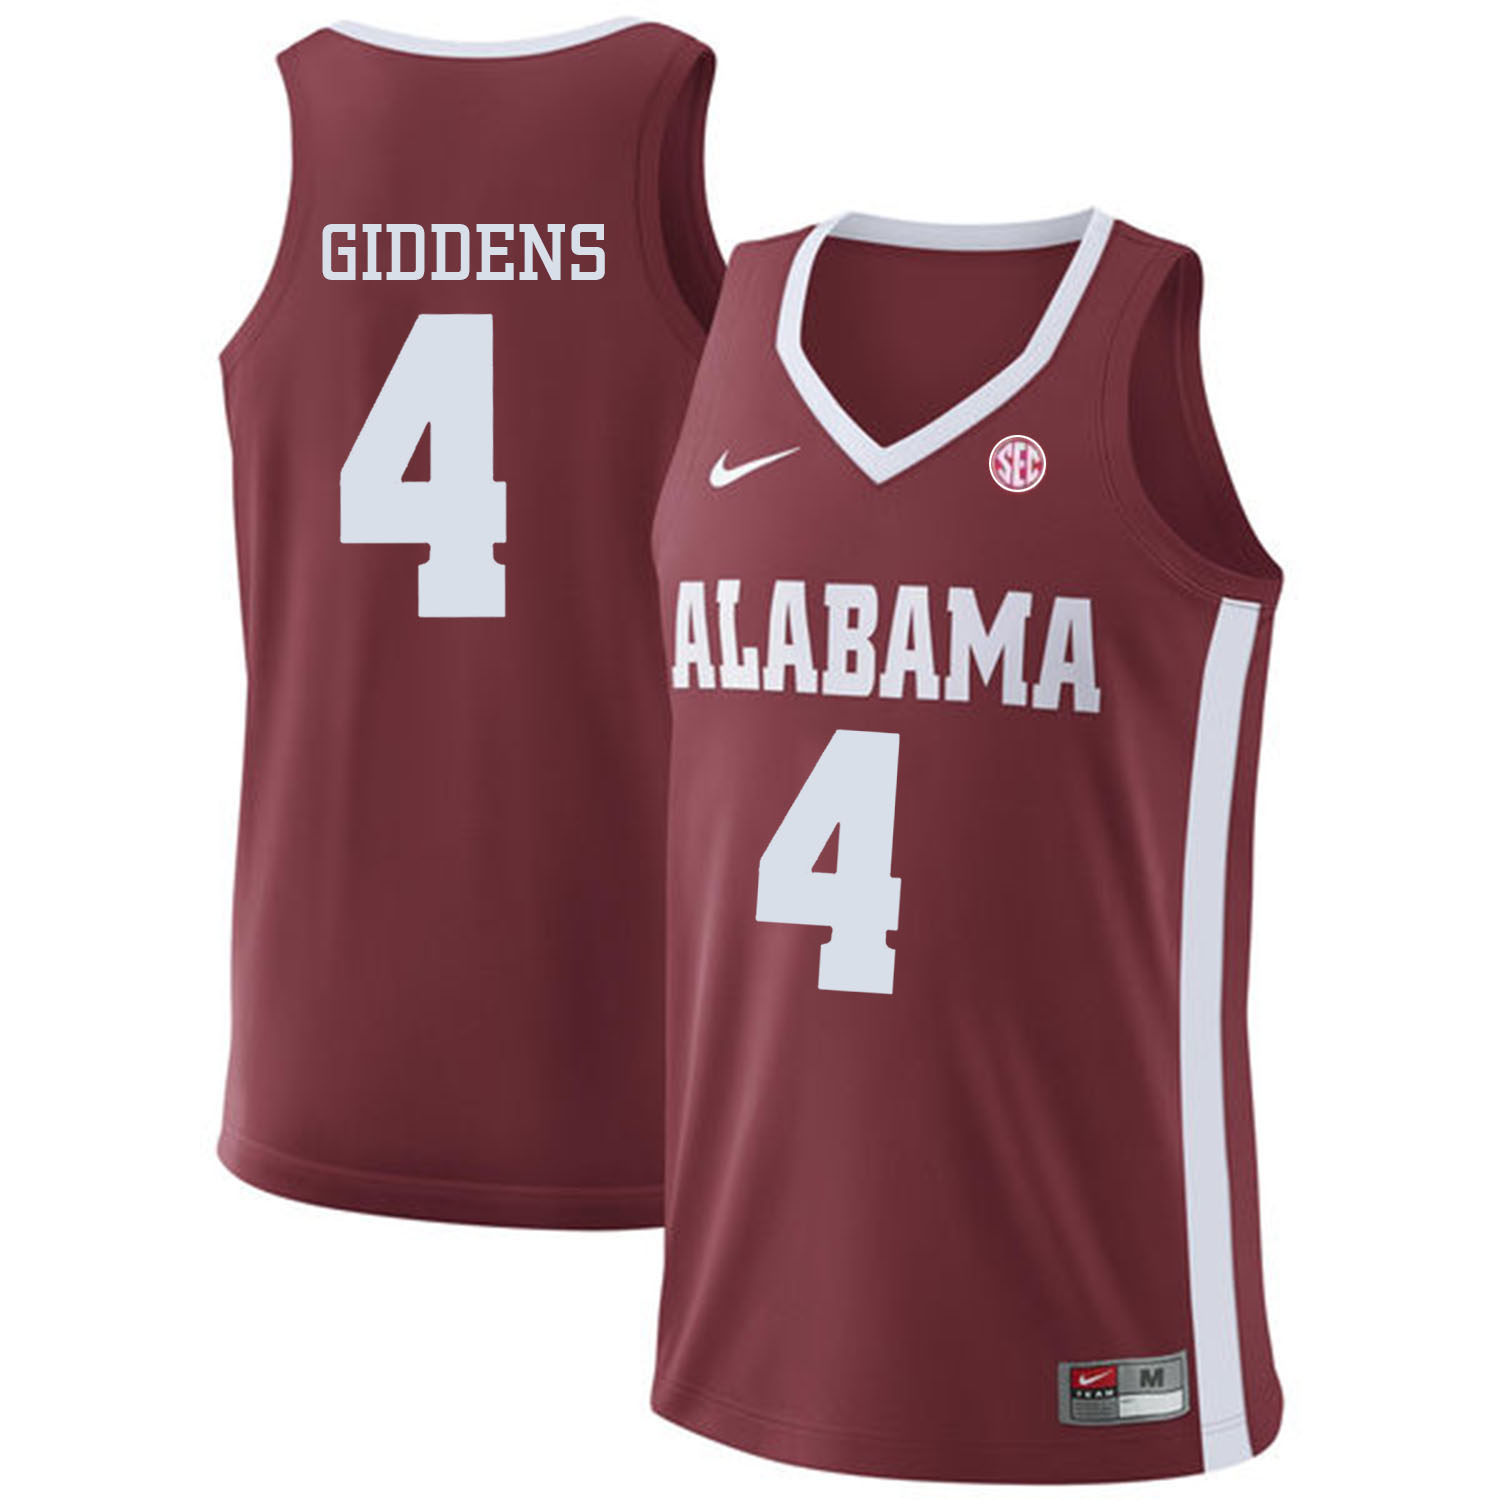 Alabama Crimson Tide 4 Daniel Giddens Red College Basketball Jersey